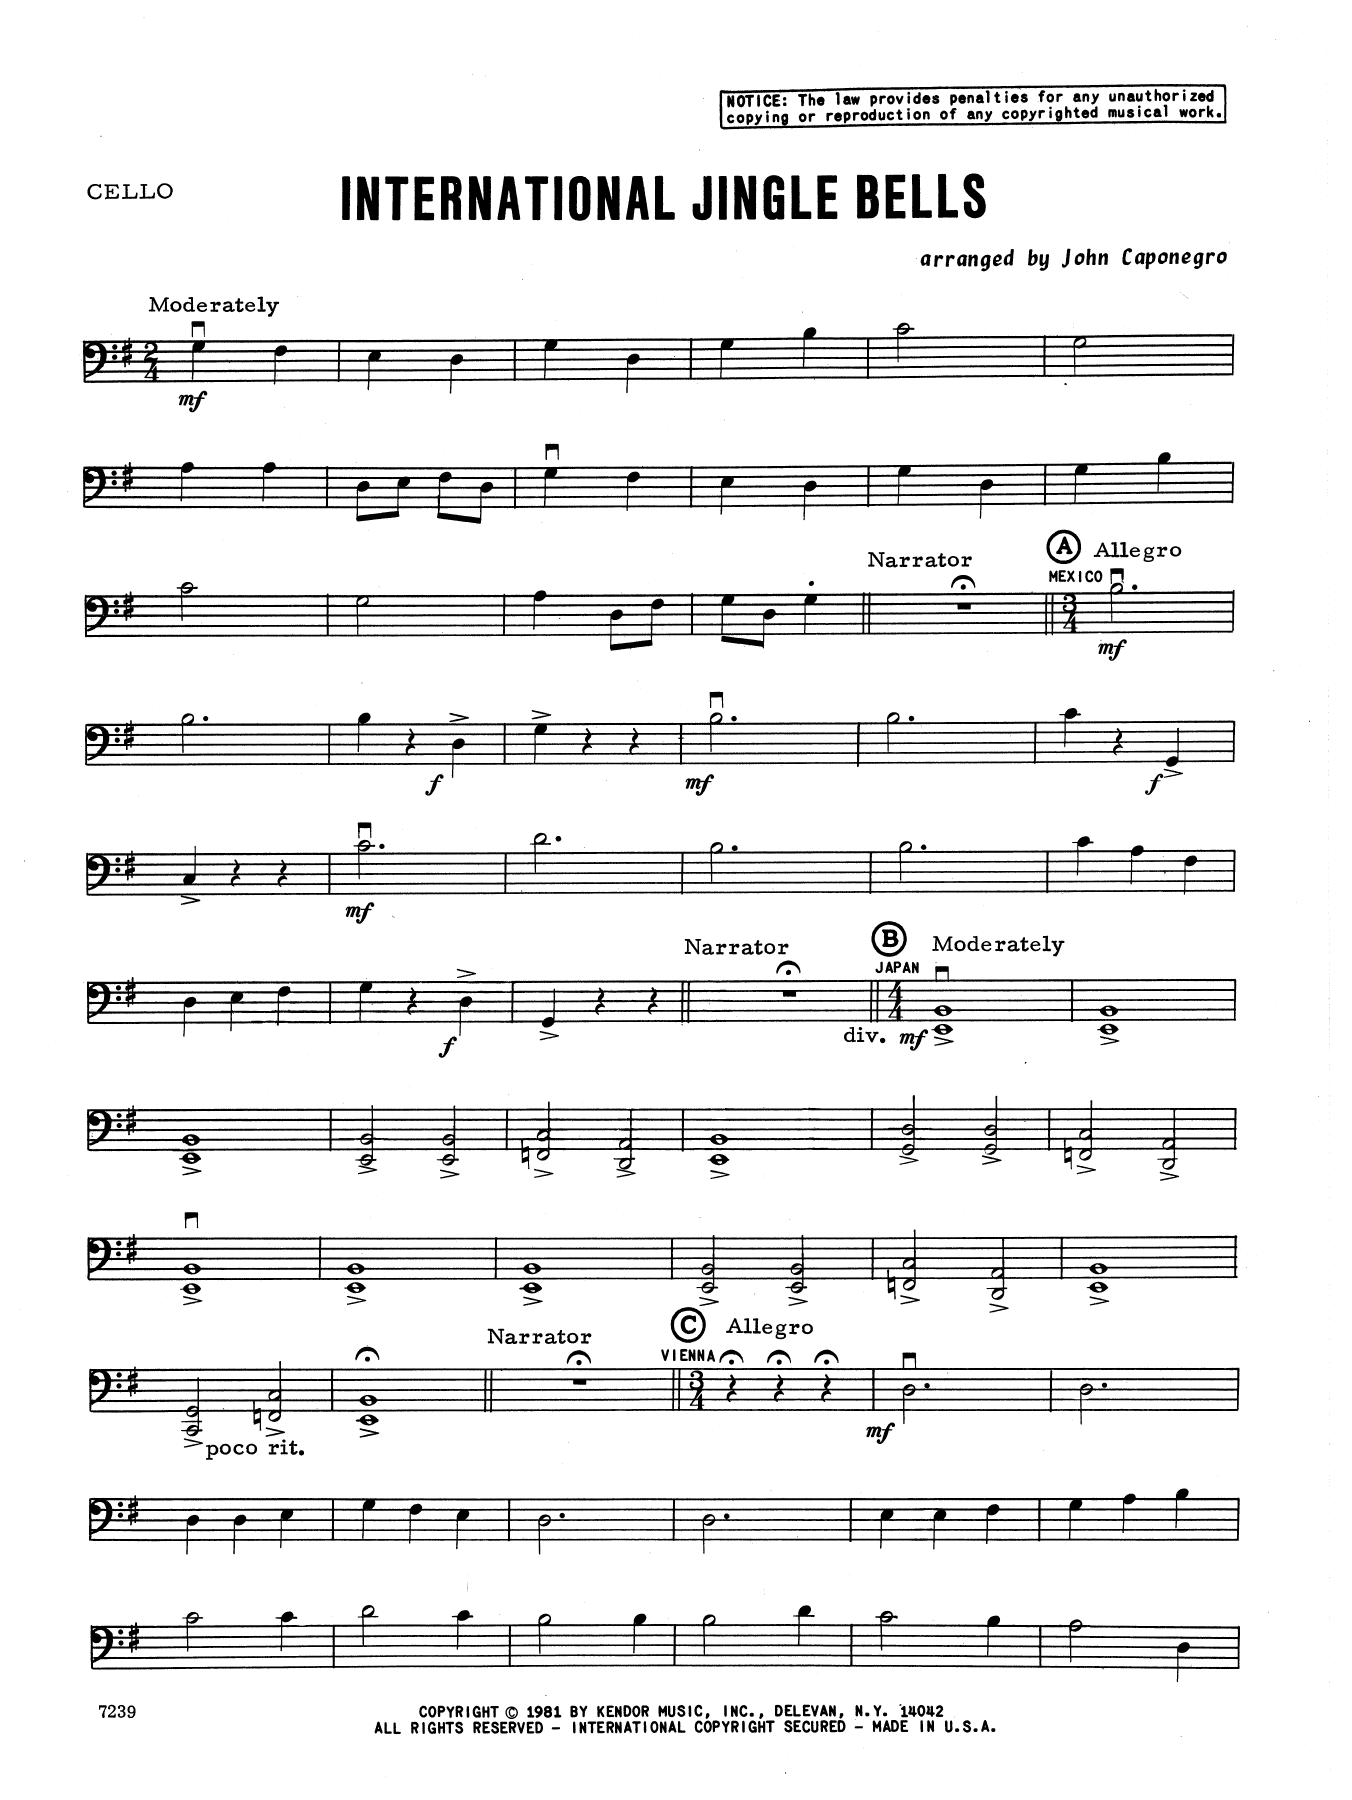 Download John Caponegro International Jingle Bells - Cello Sheet Music